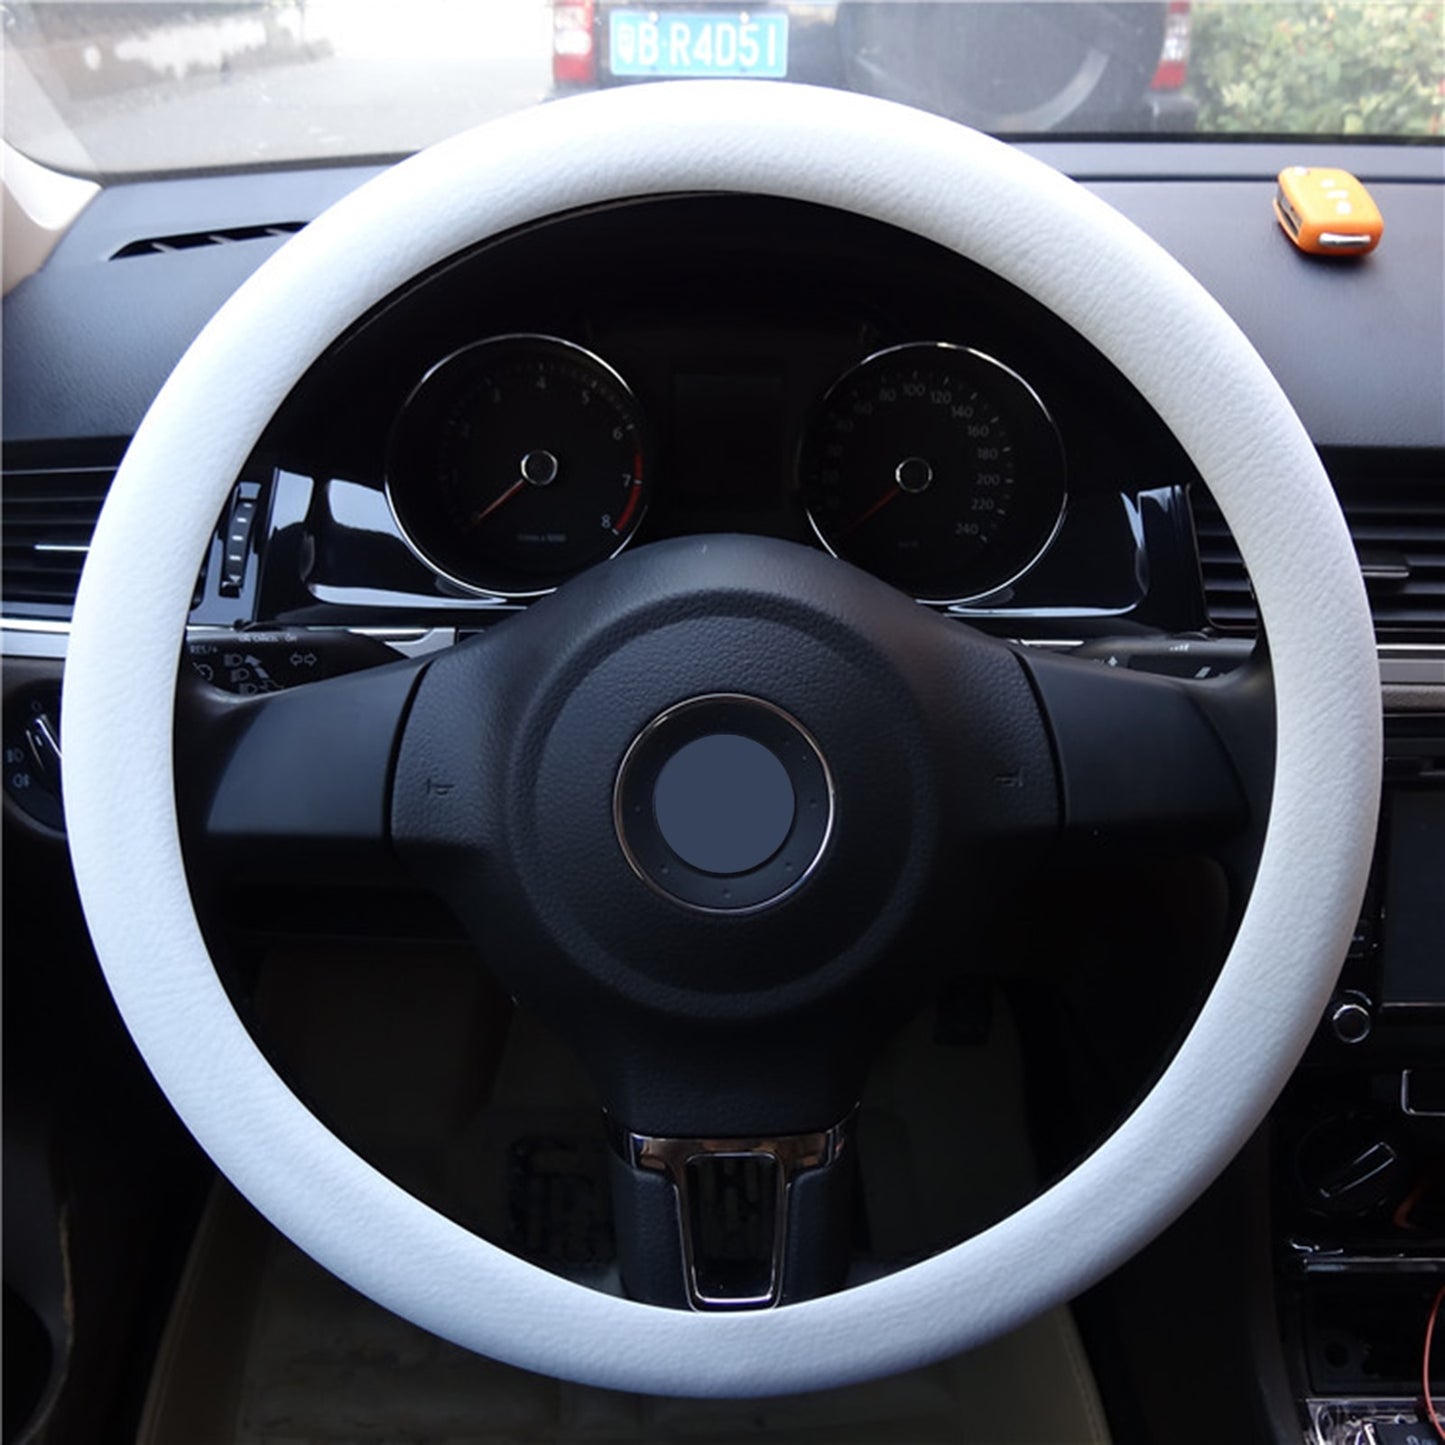 Universal Silicone Solid Color Anti-slip Car Steering Wheel